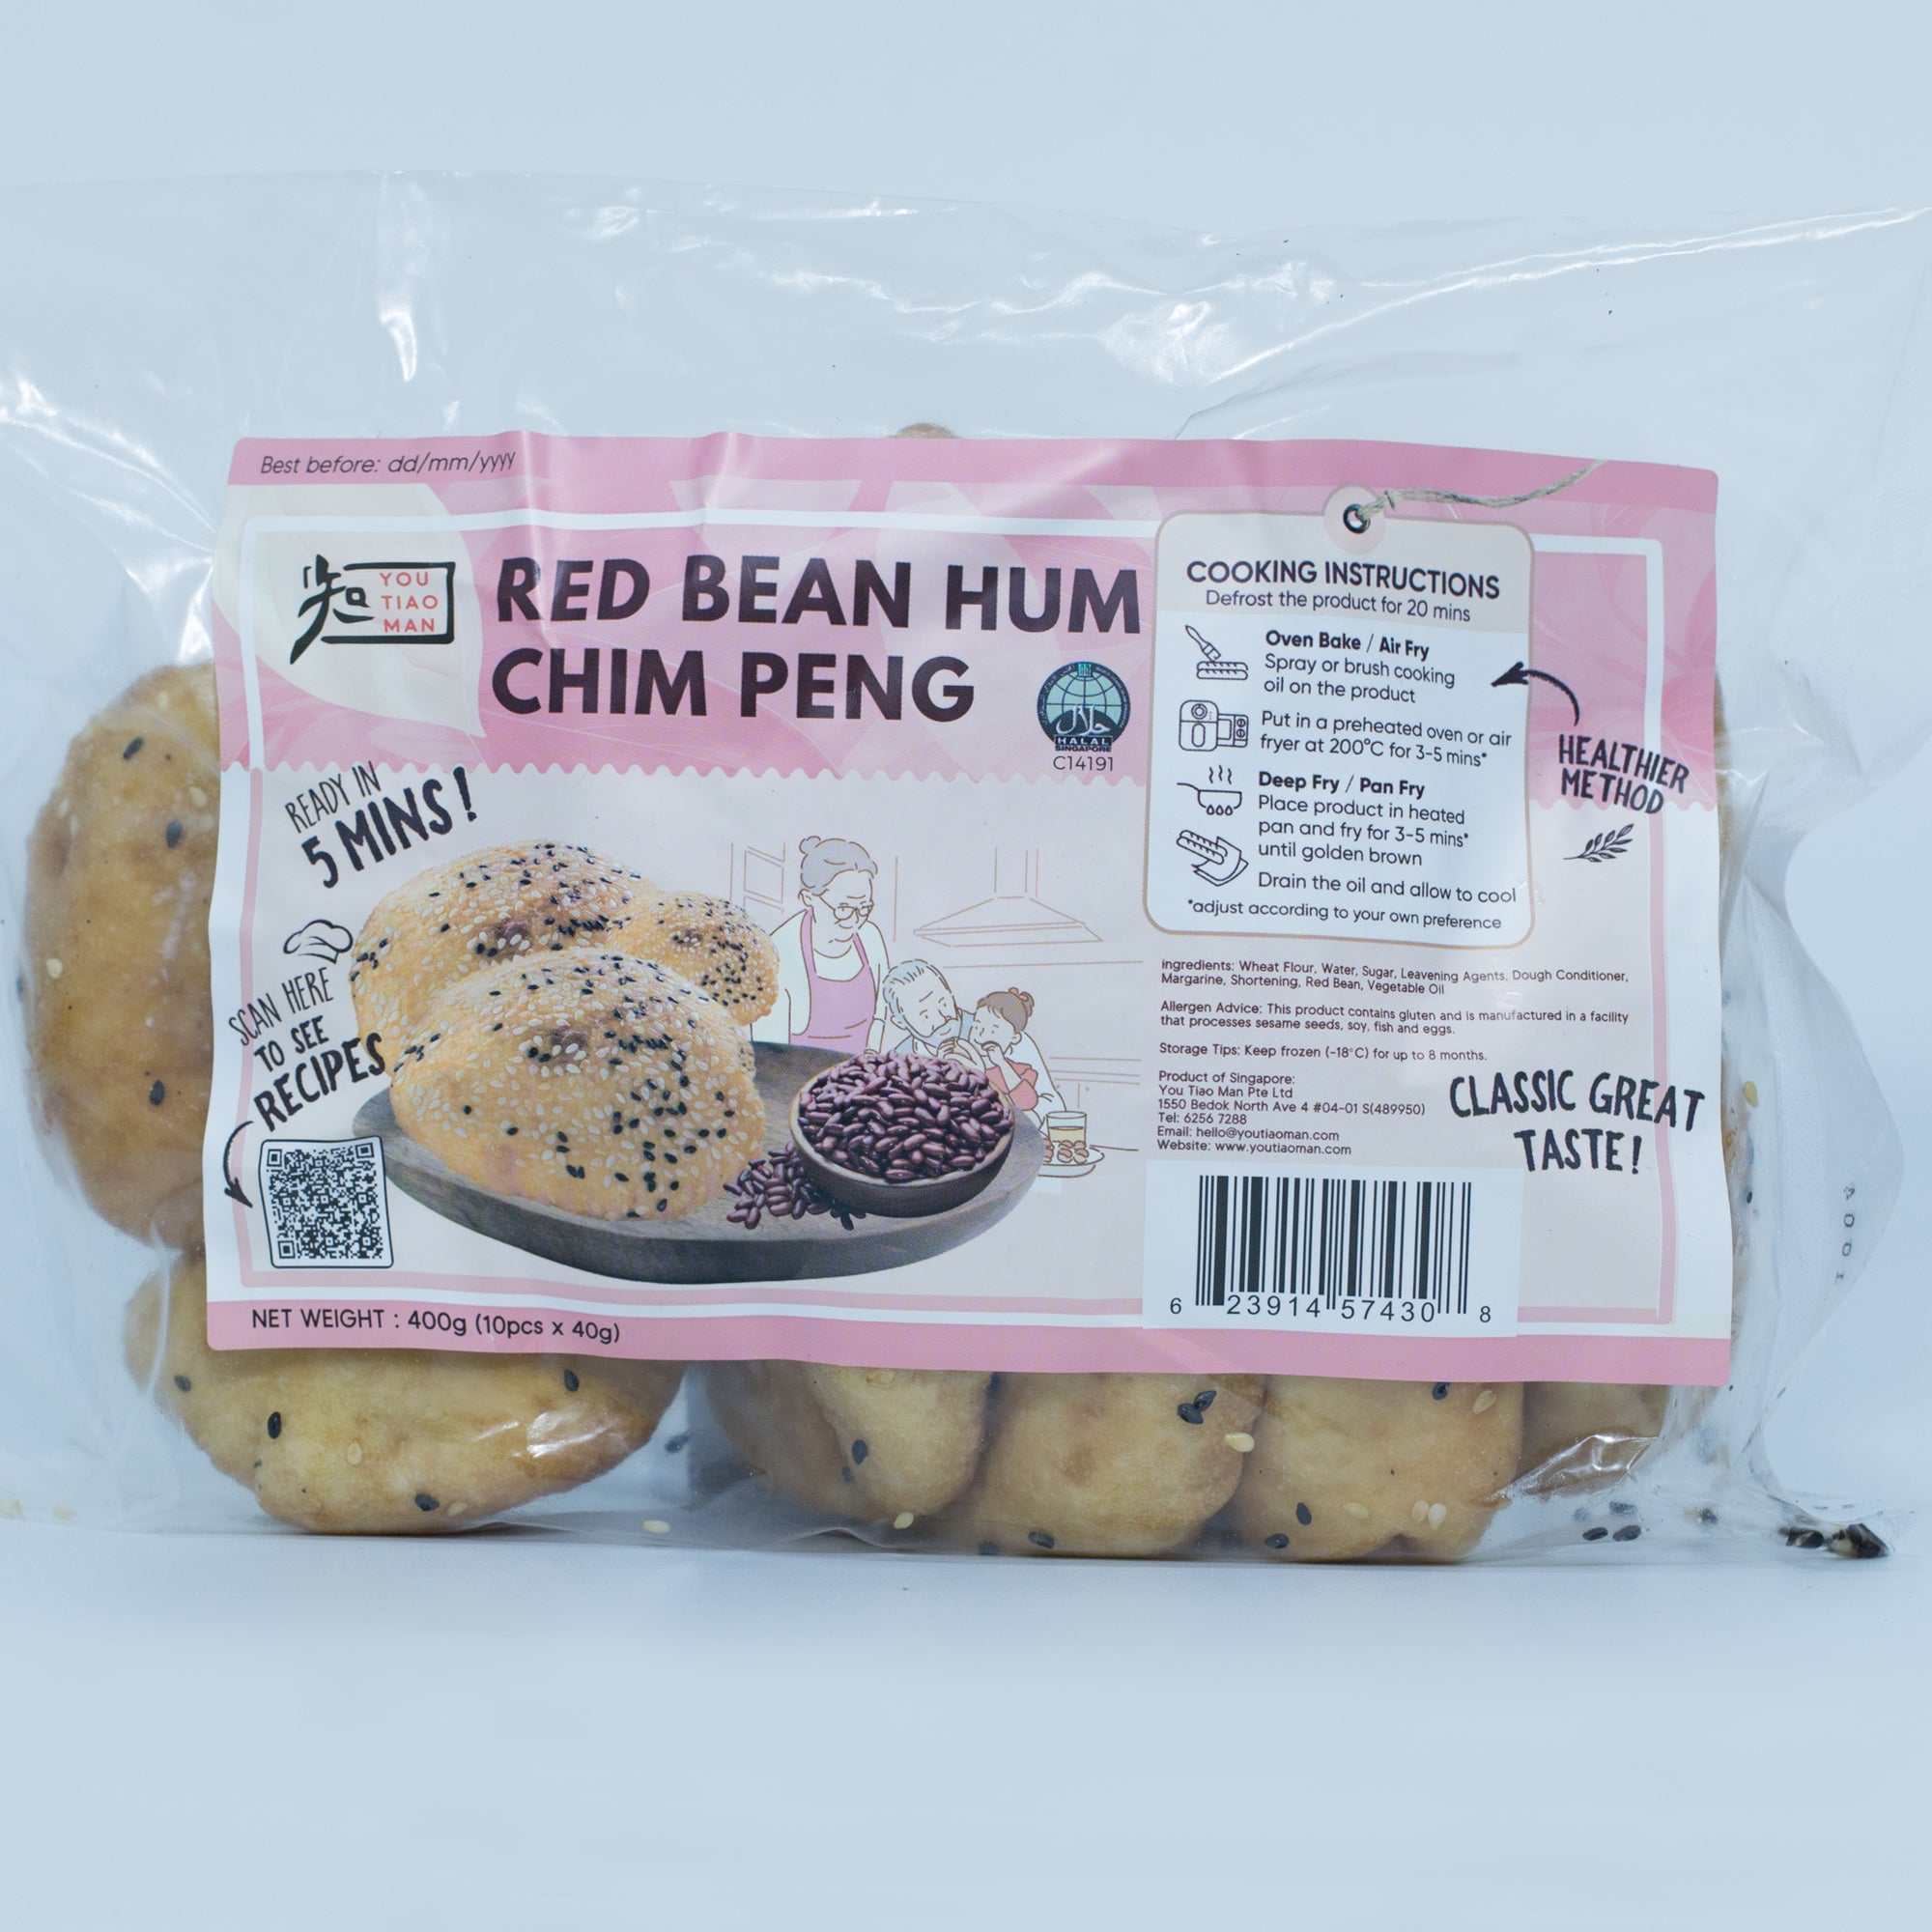 Red Bean Bun Hum Chim Peng (Mini)